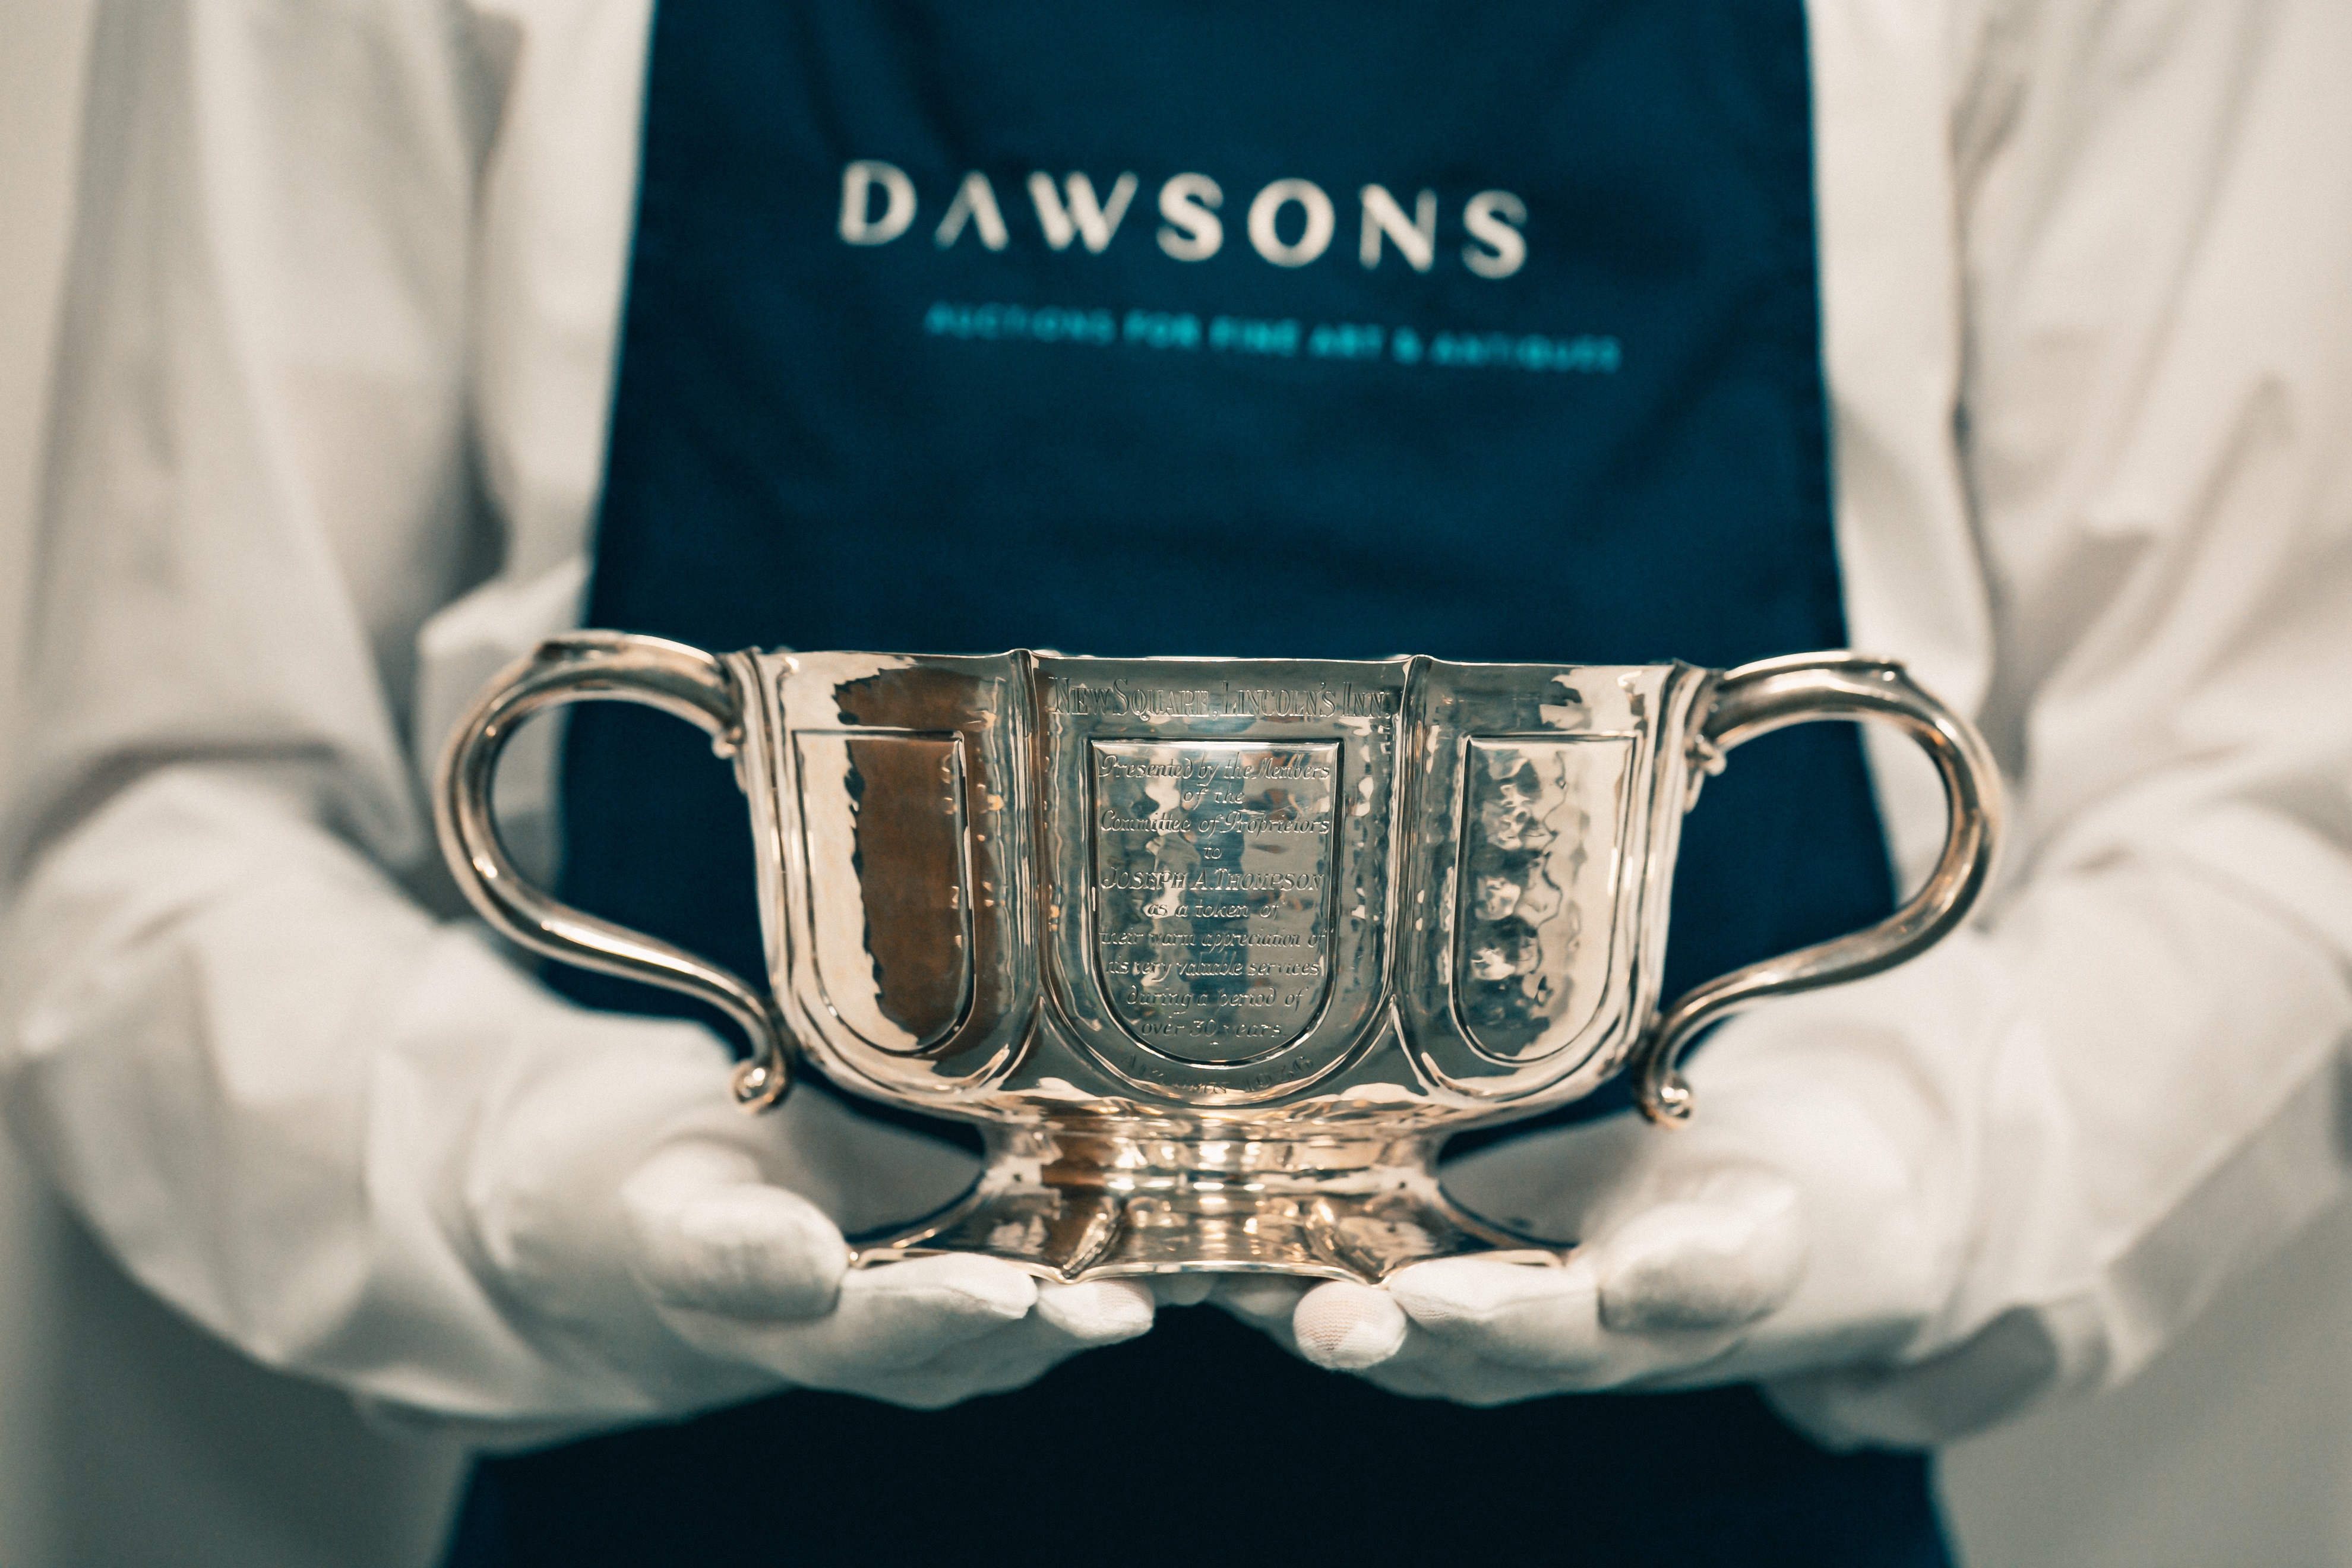 silver bowl held by Dawsons porter